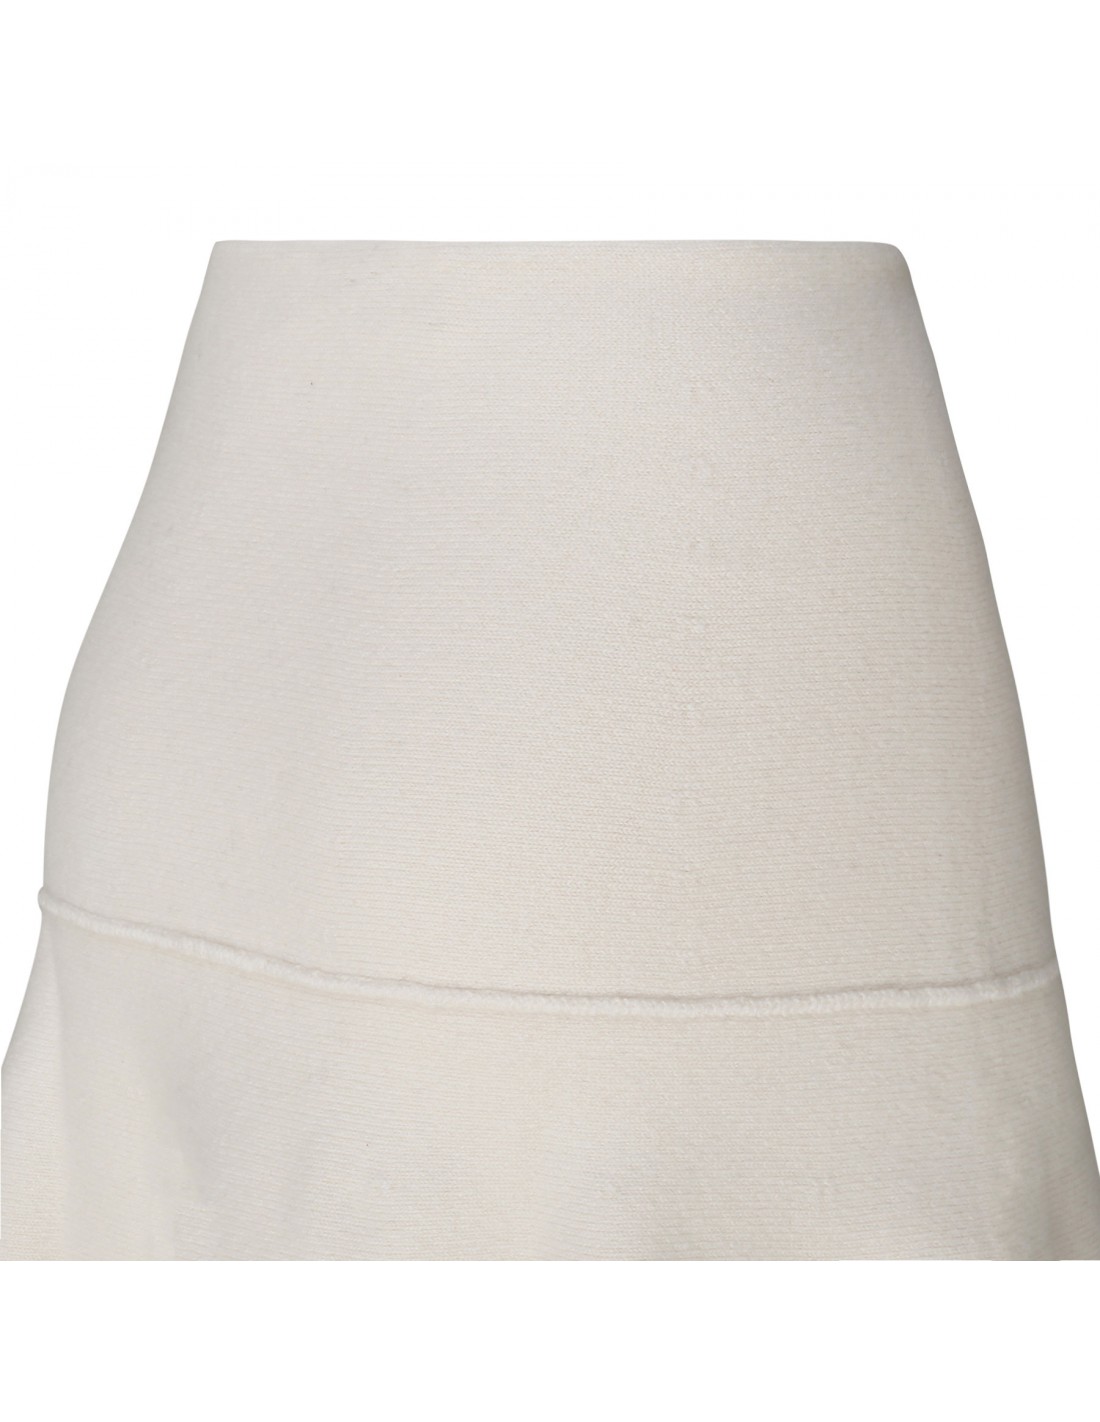 Noa cream skirt